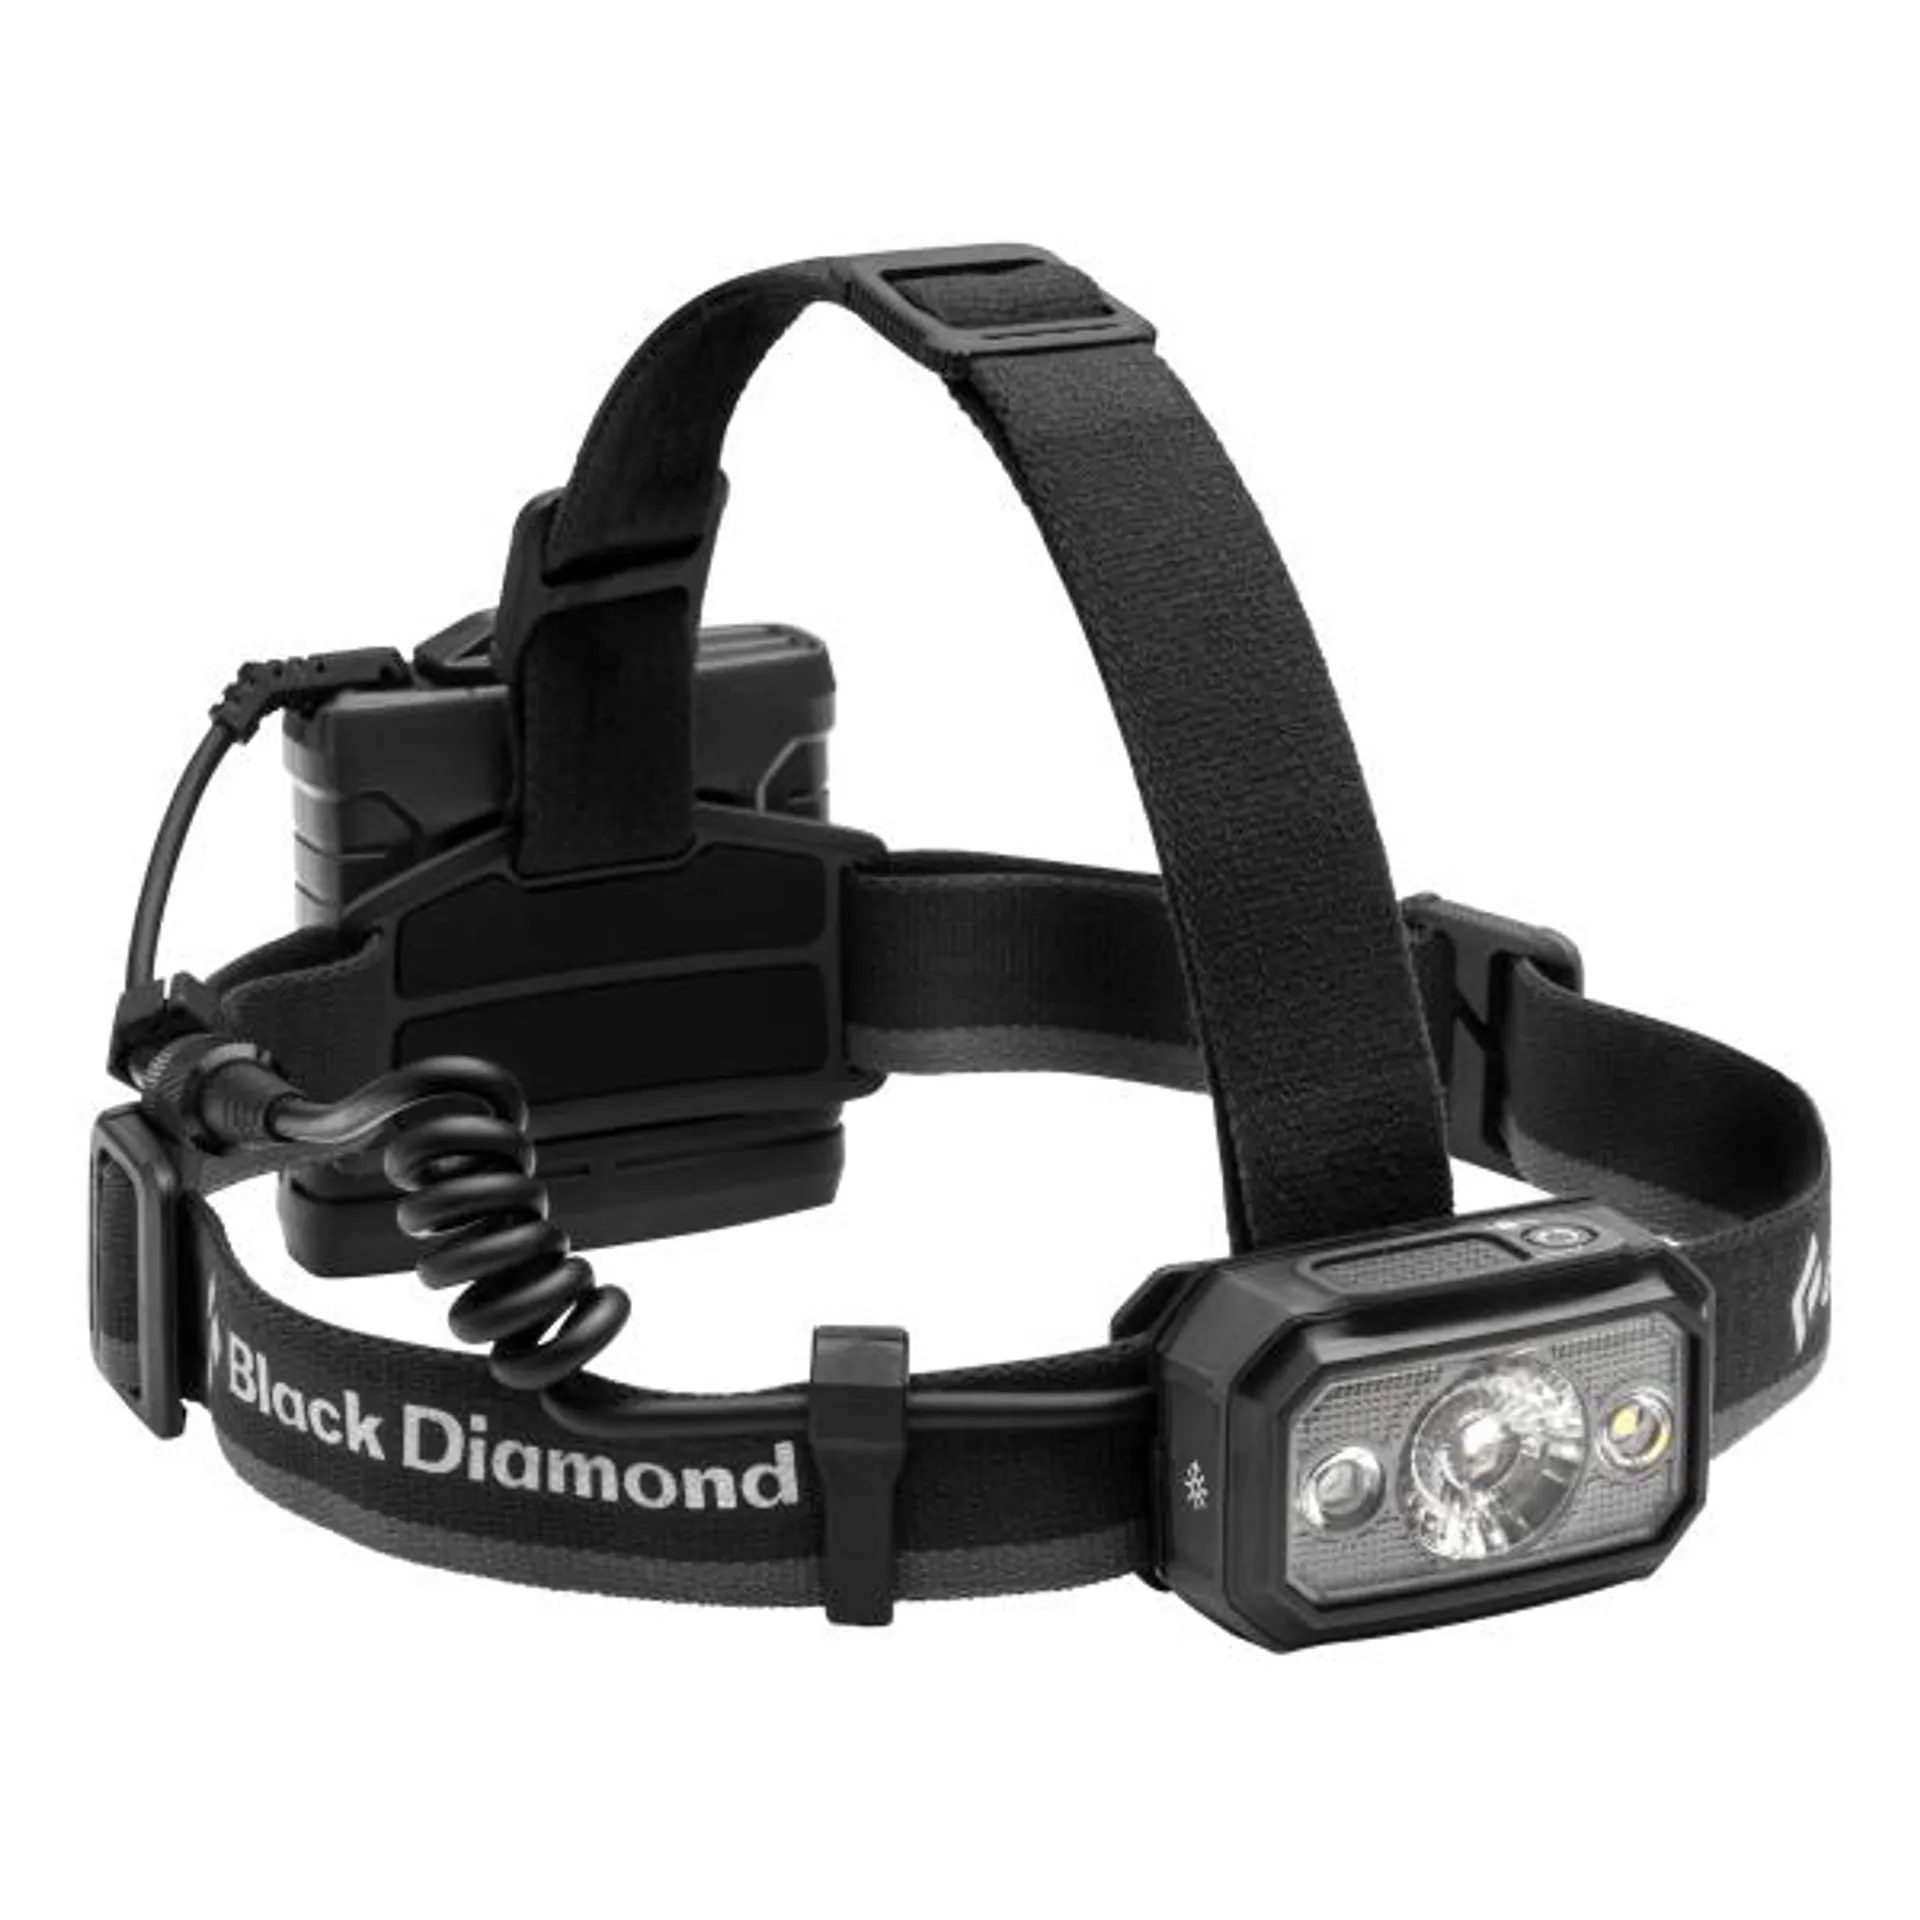 Black Diamond Equipment -